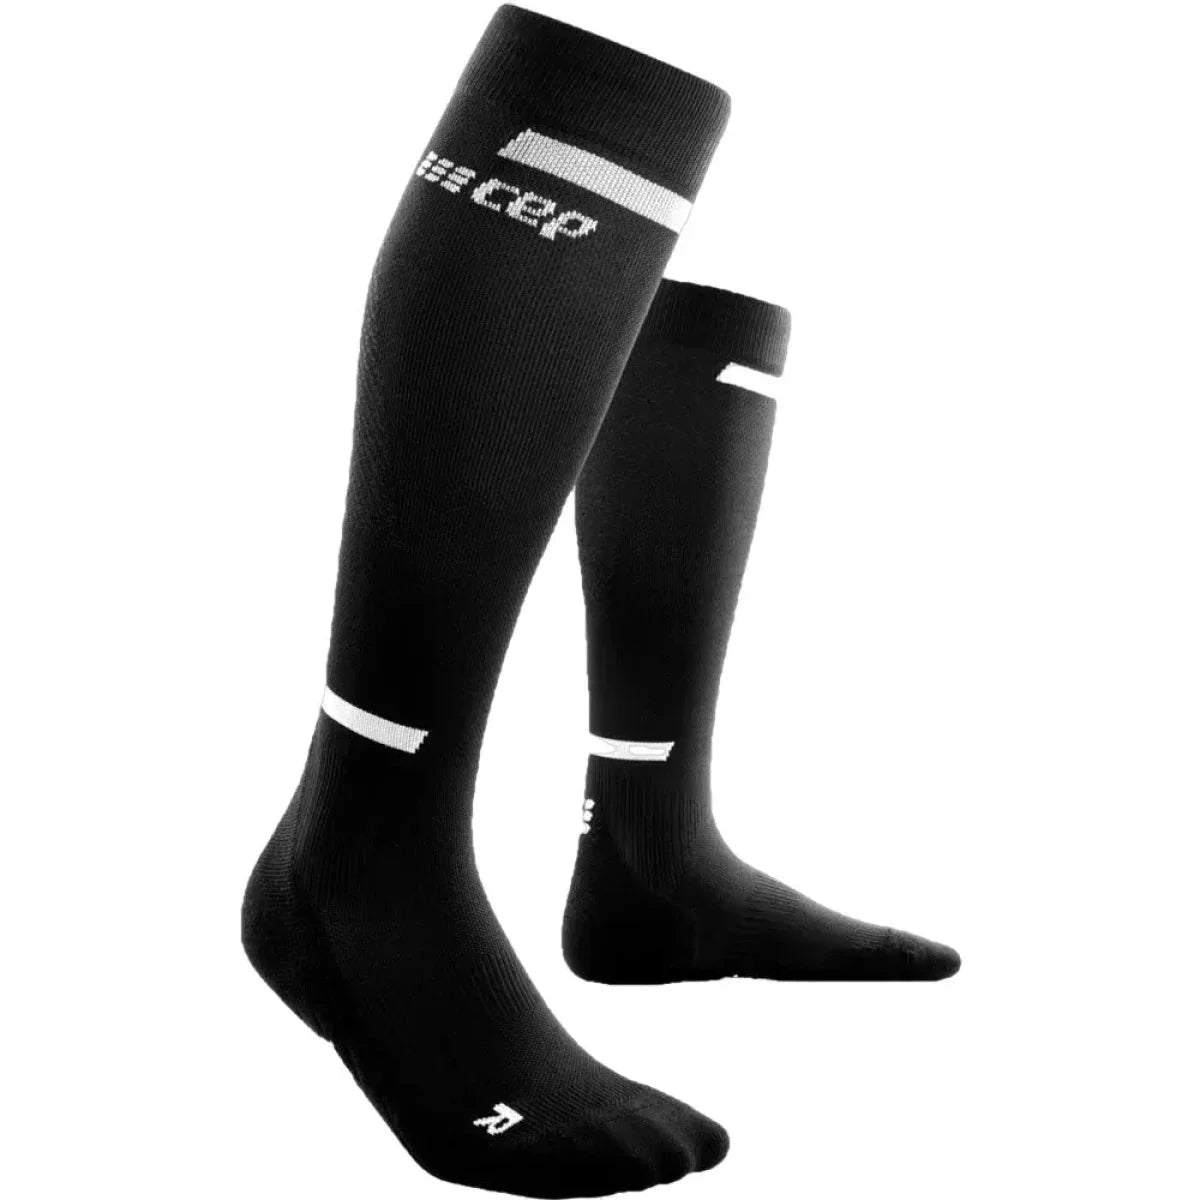 Men's CEP The Run Tall Compression Socks 4.0